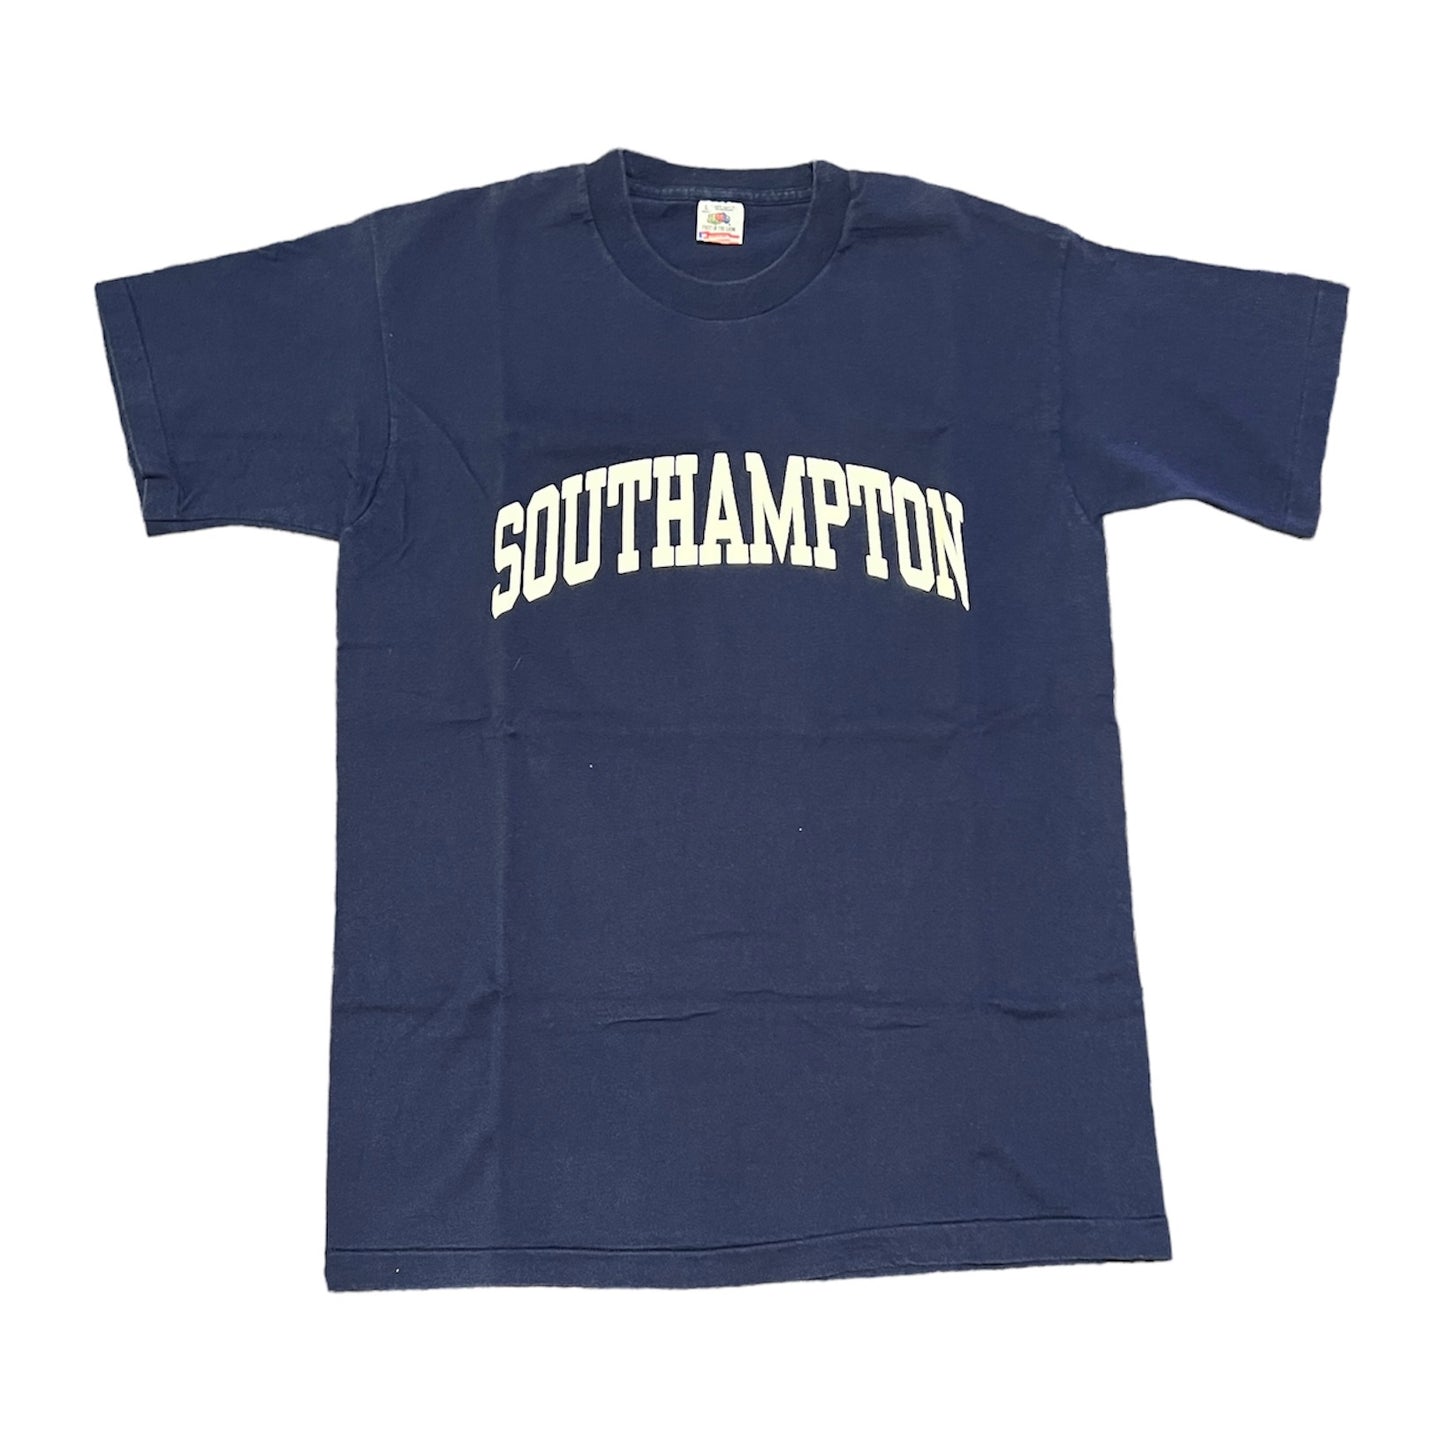 Southampton New York T-Shirt Size Large